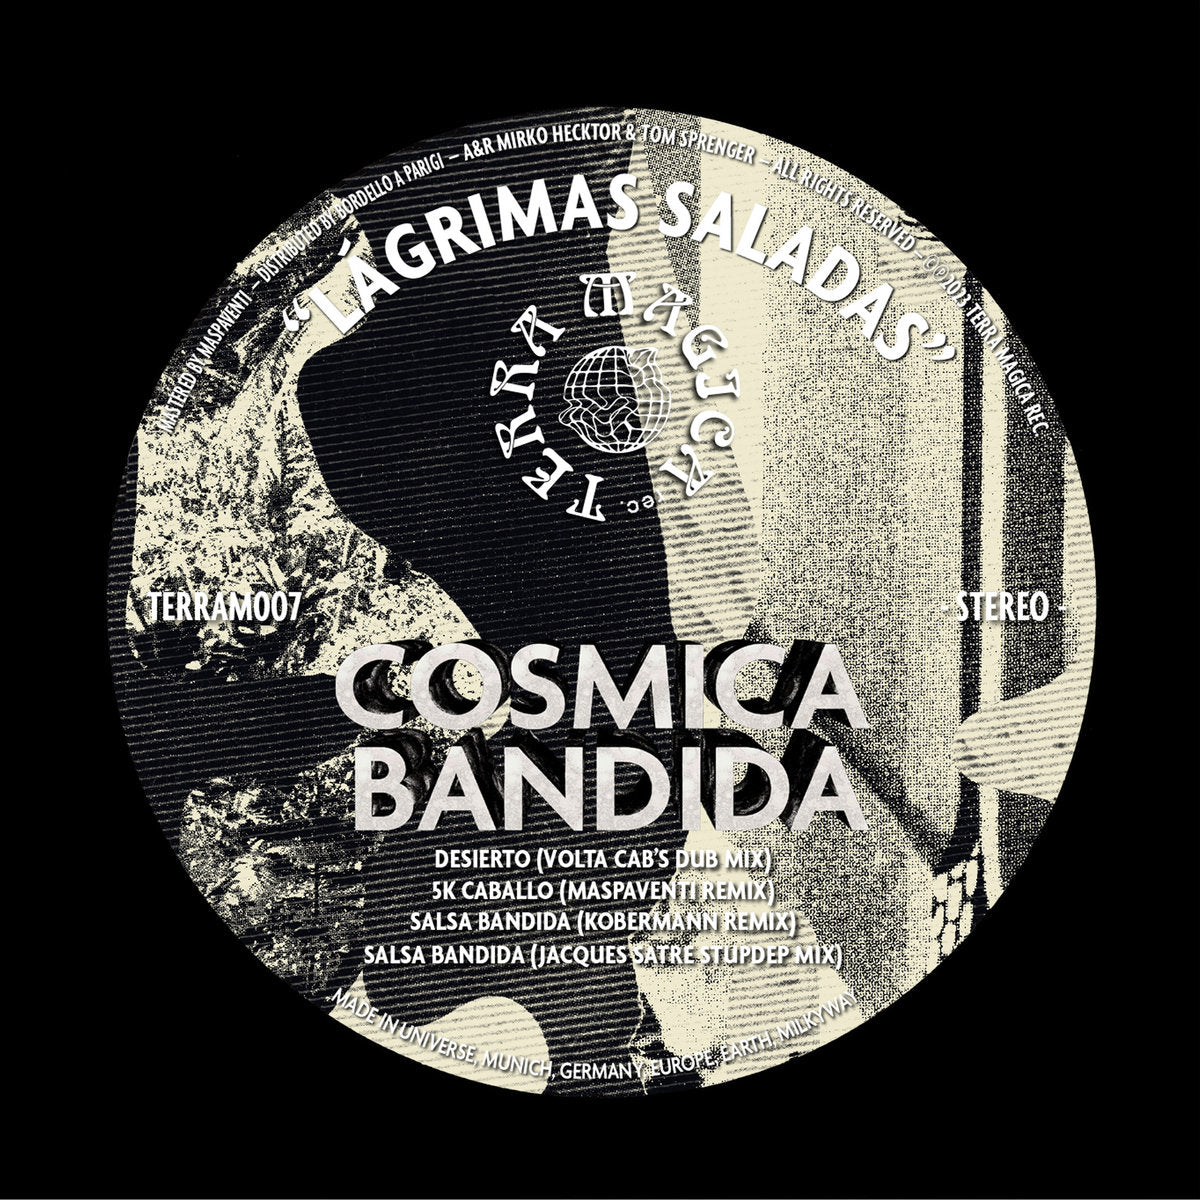 【LP】Cosmica Bandida - Lagrimas Saladas